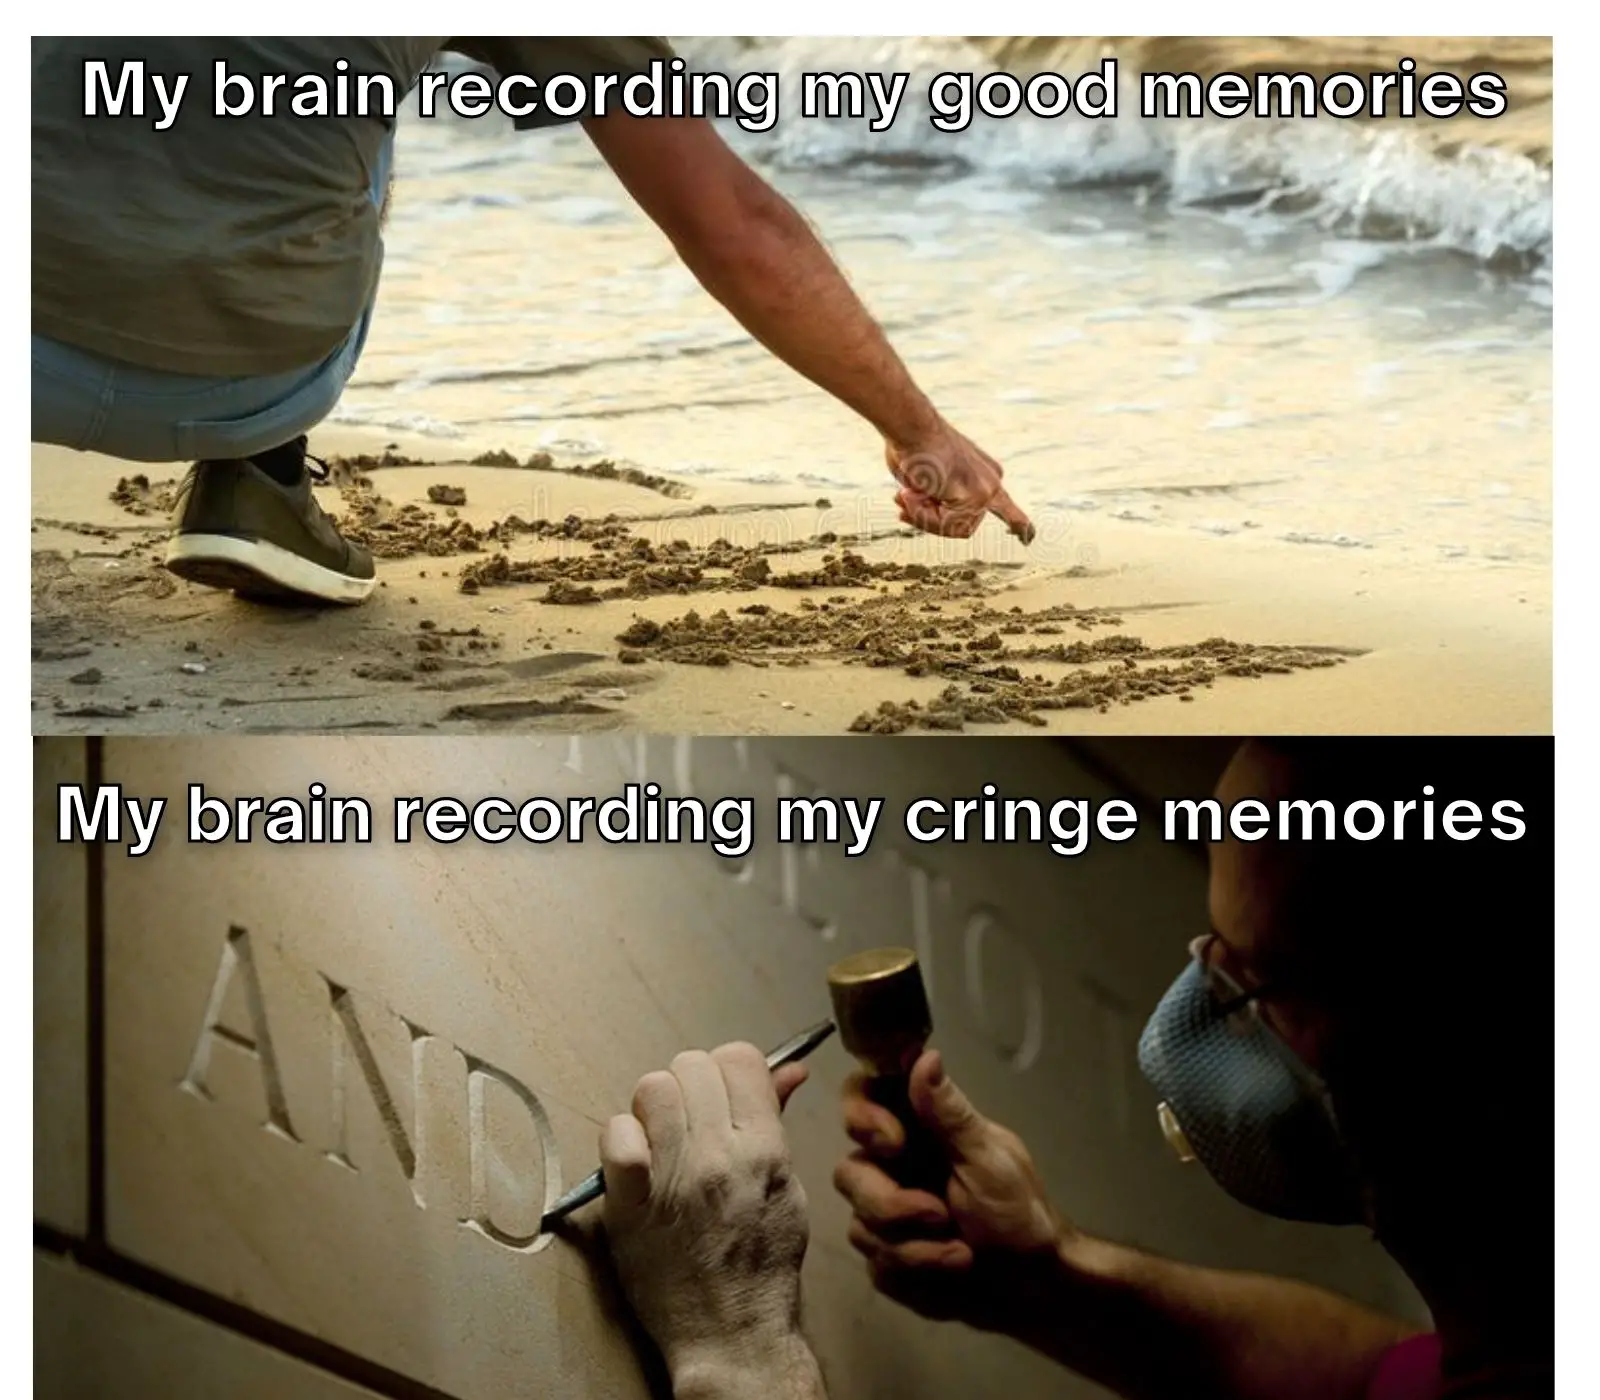 Beach meme on memories